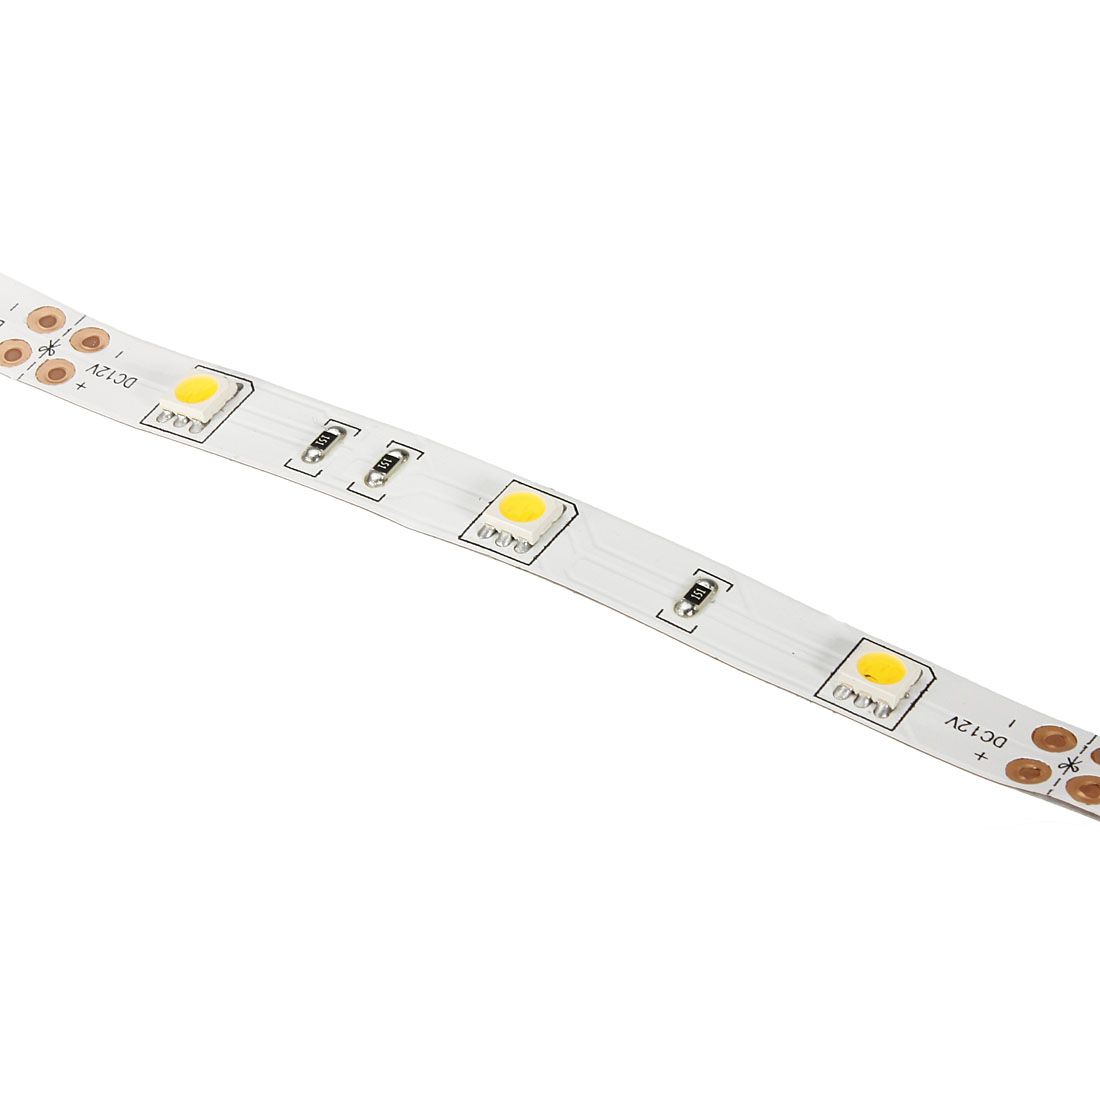 2PCS-5M-SMD5050-Warm-White-Non-Waterproof-Flexible-Tape-300-LED-Strip-Light-Lamp-DC12V-1369072